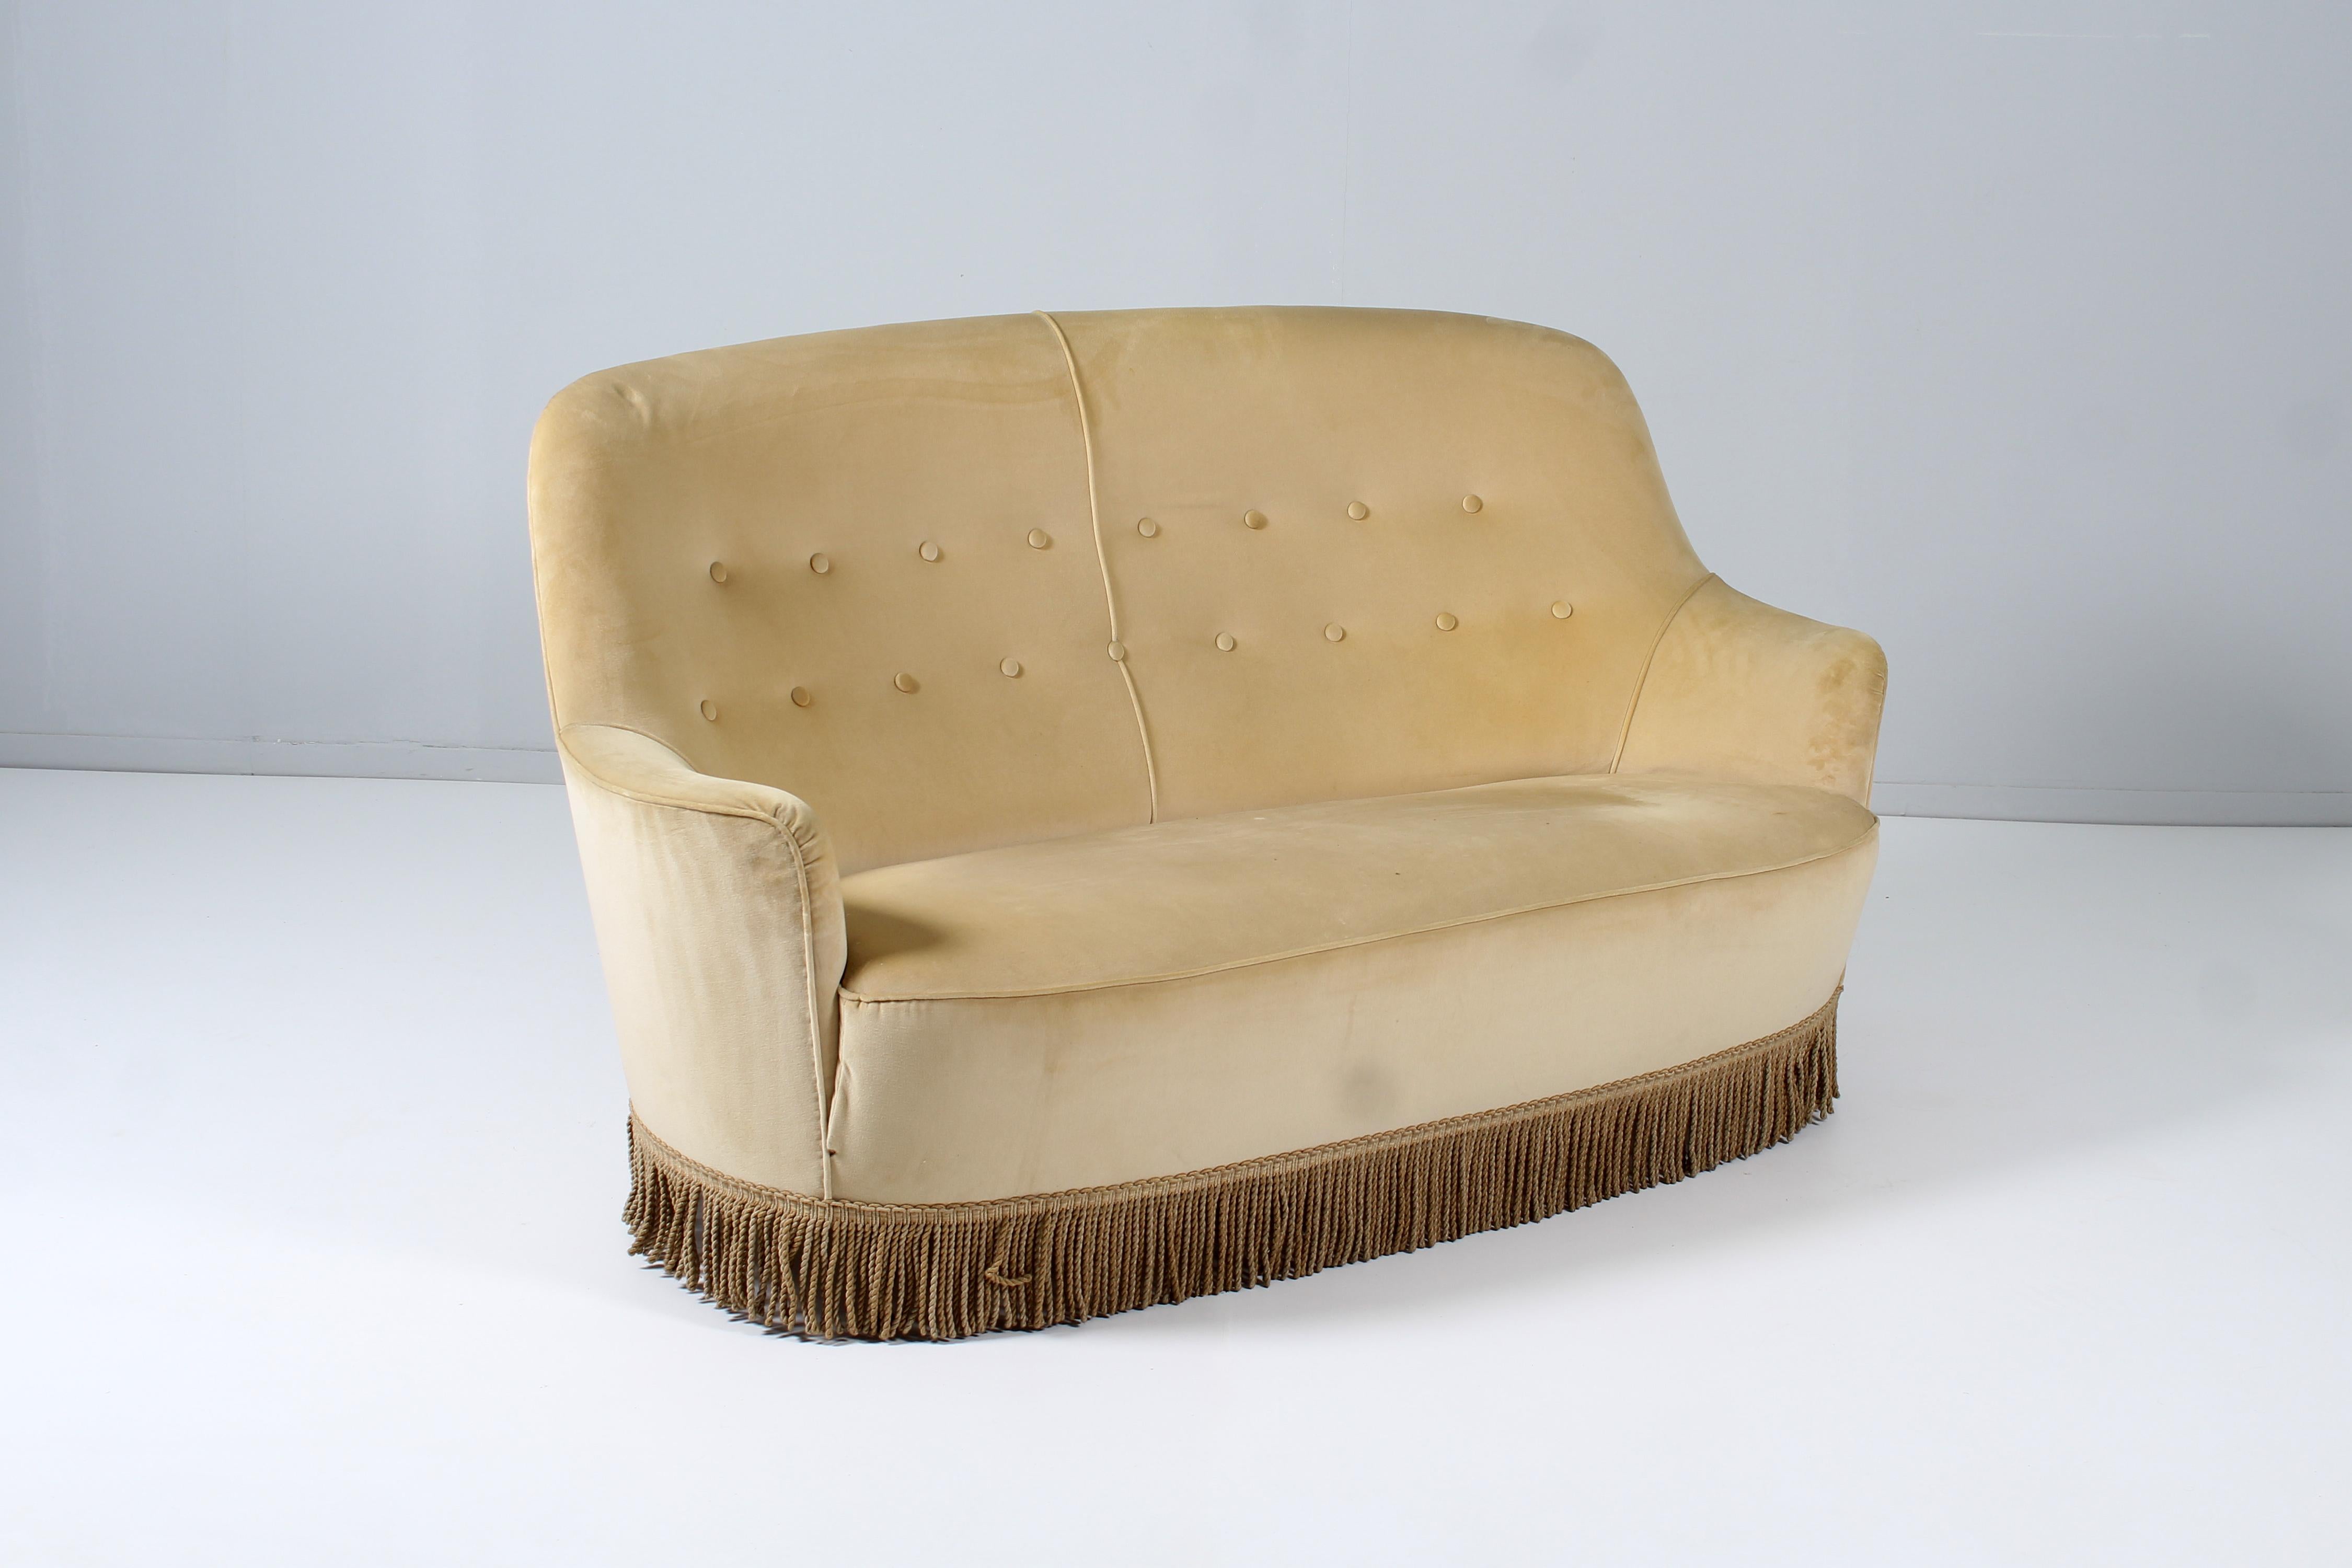 1950s style sofa